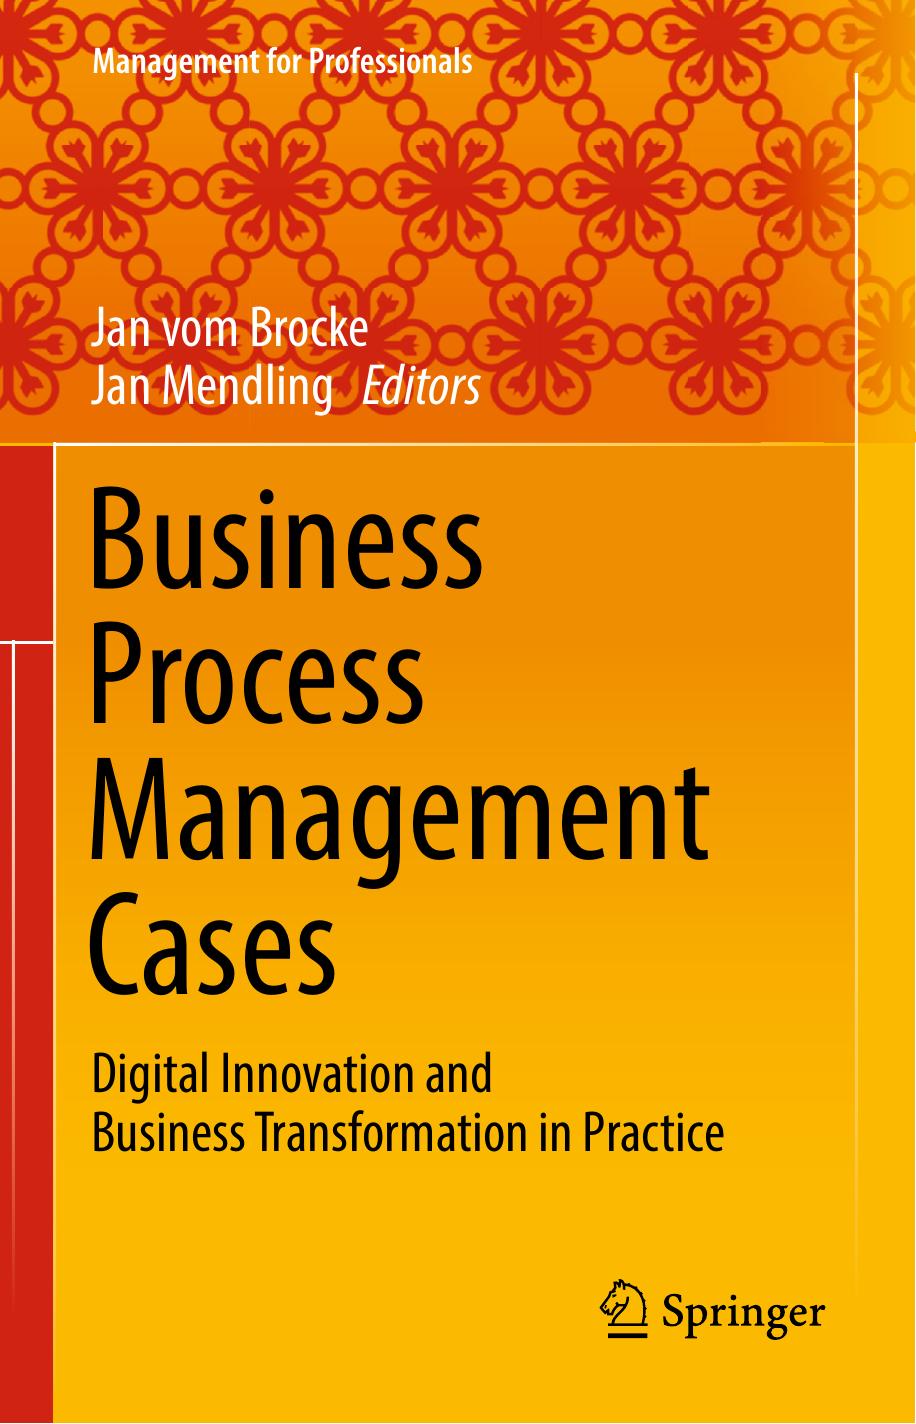 Business Process Management Cases 2018